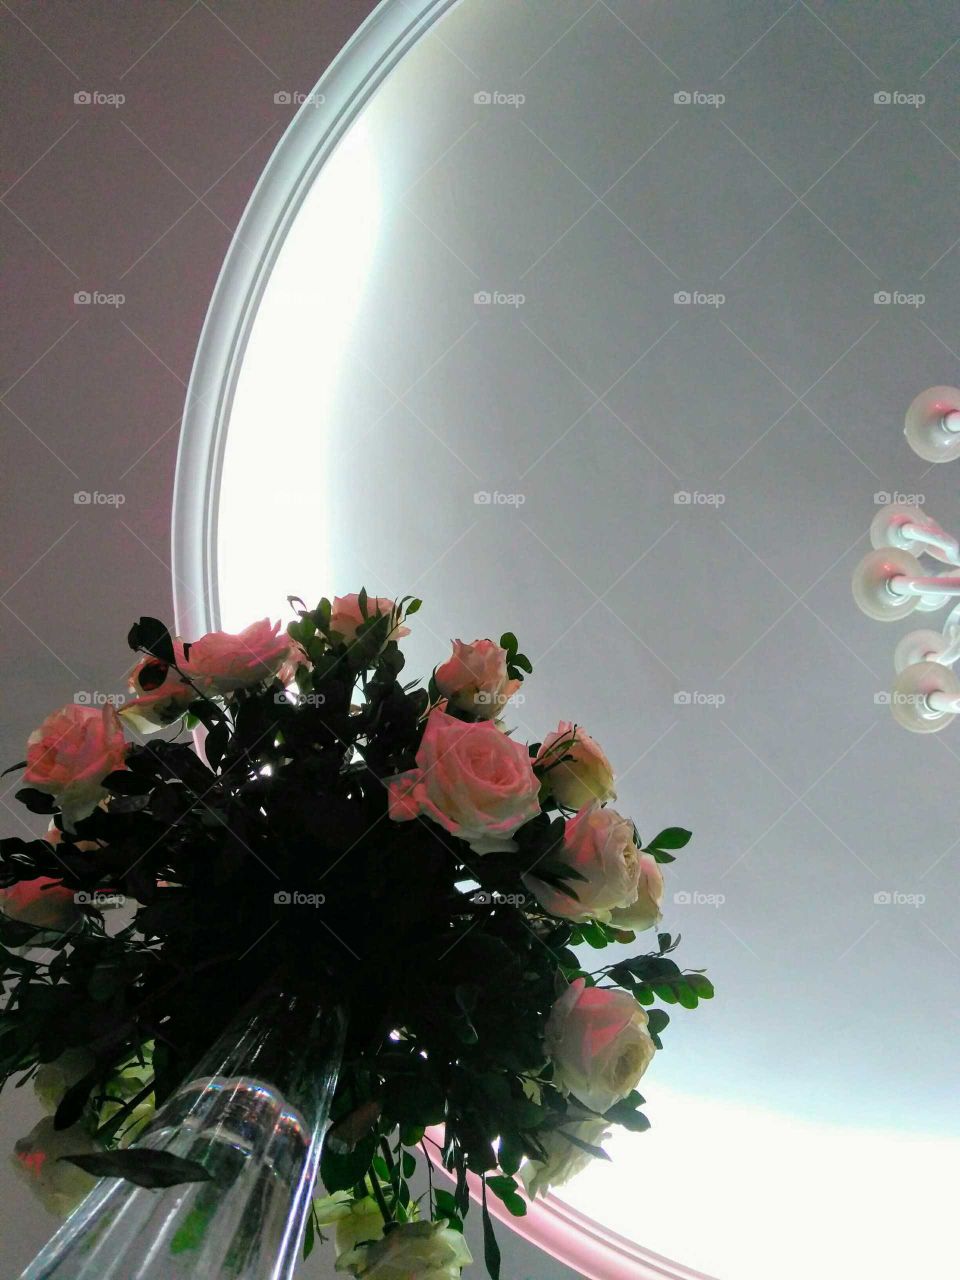 a flower bouquet against the ceiling